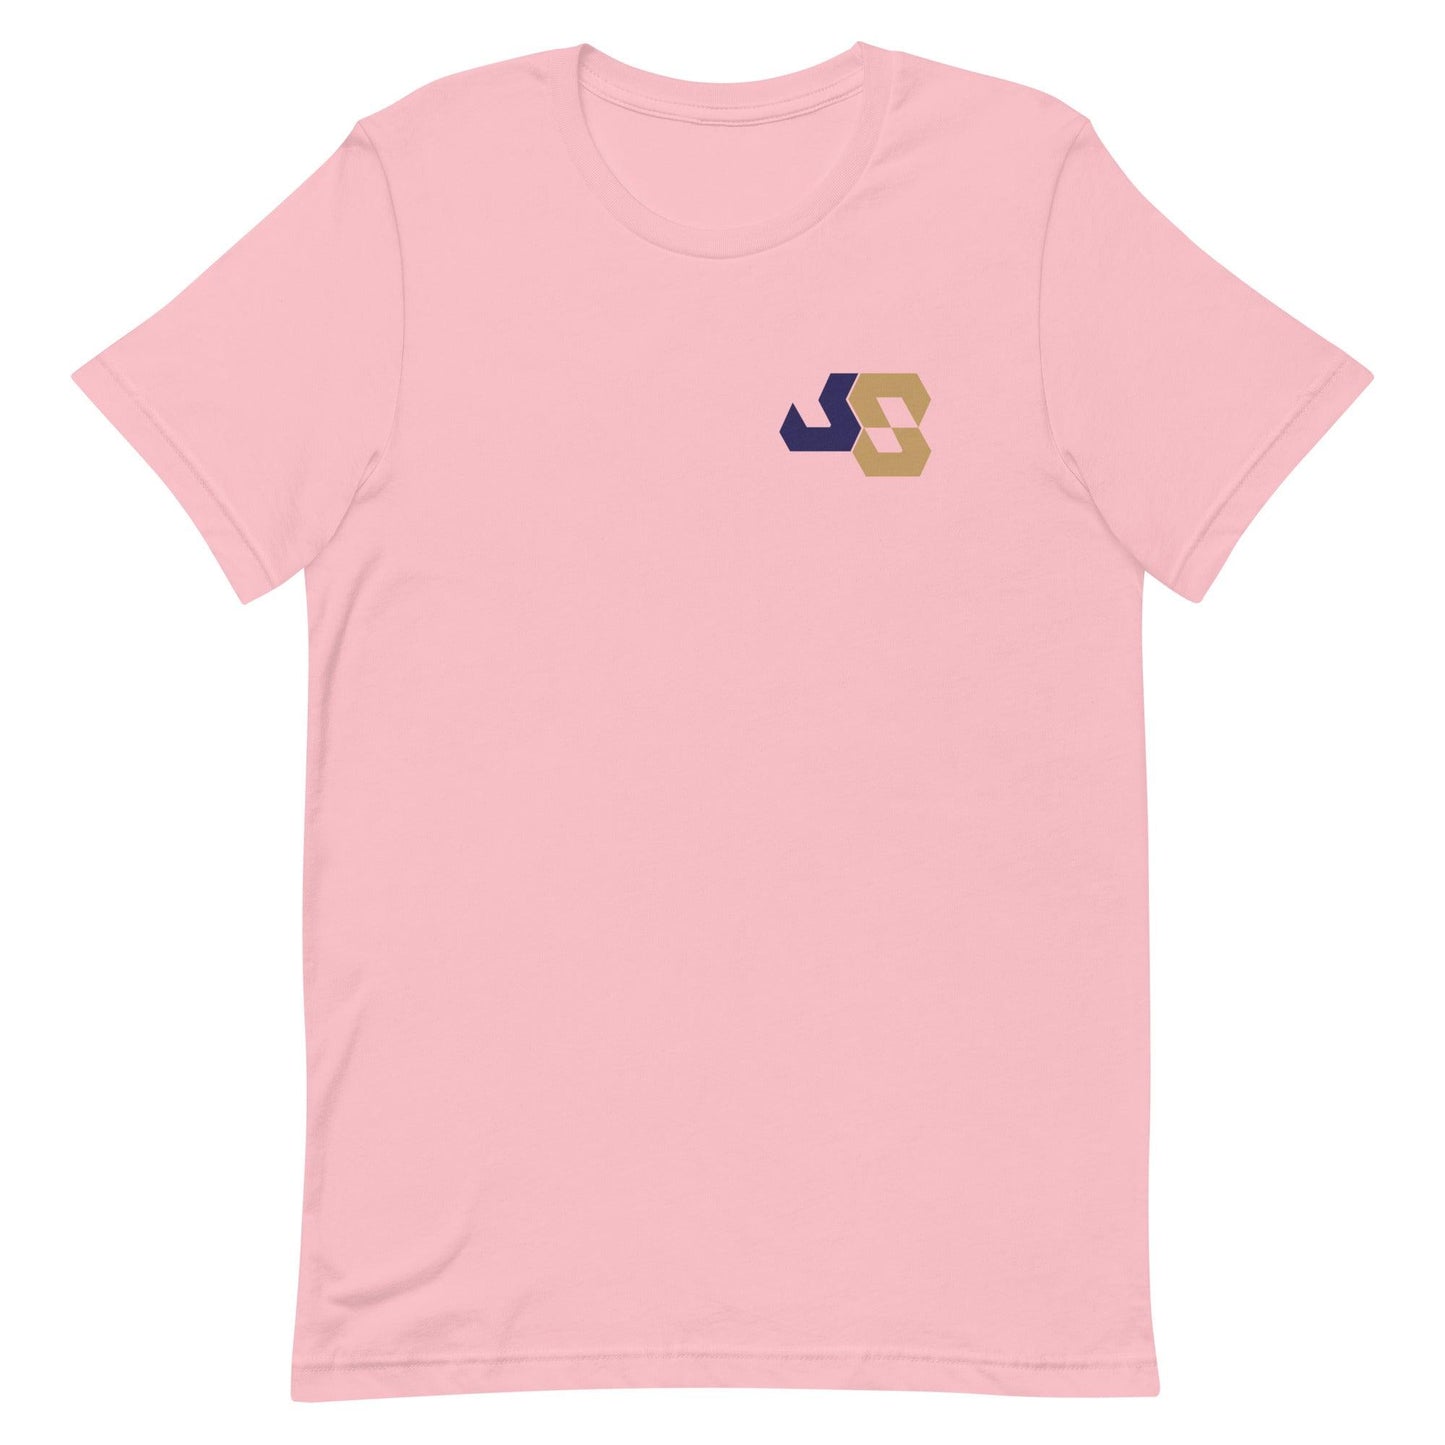 Josiah Silver “JS8” t-shirt - Fan Arch